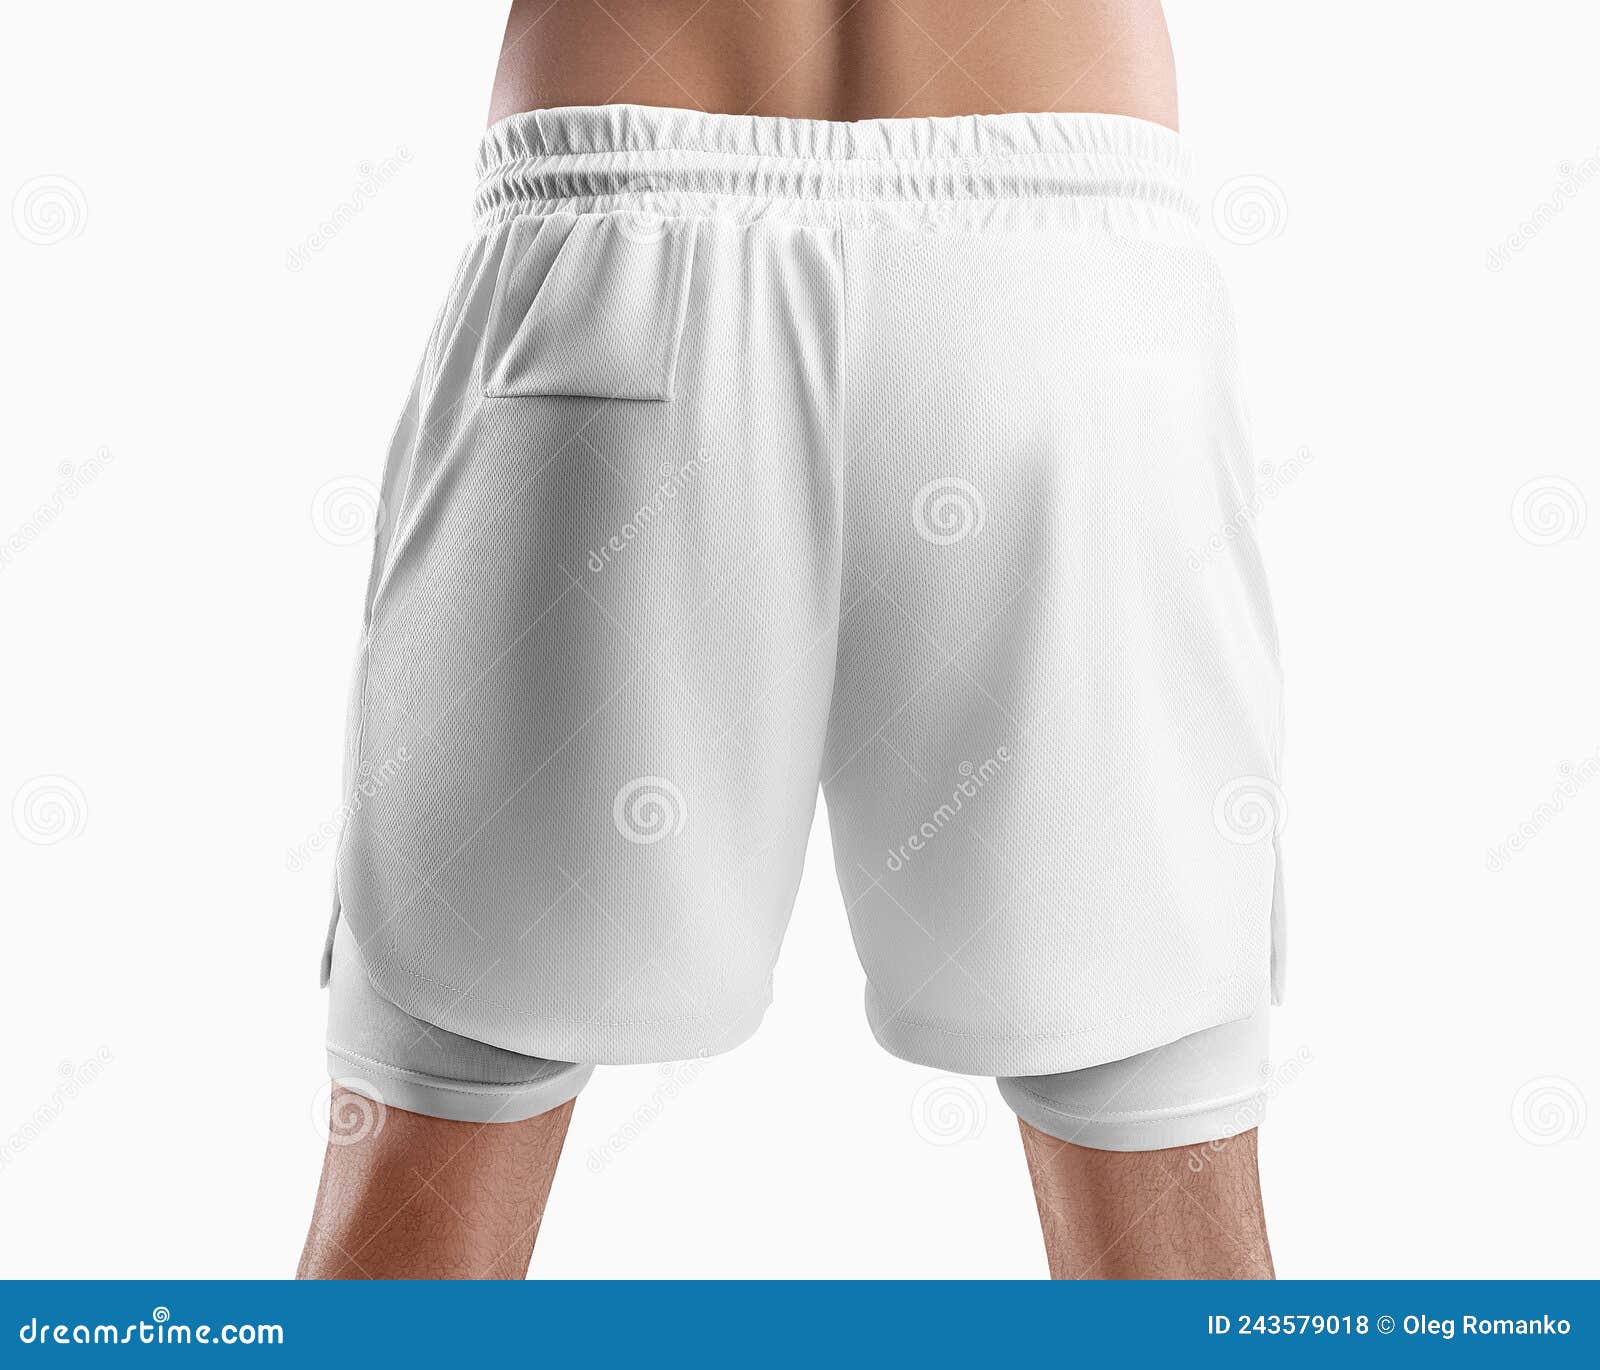 https://thumbs.dreamstime.com/z/mockup-white-sports-shorts-underpants-compression-line-back-view-sports-undershorts-man-design-pattern-mockup-243579018.jpg